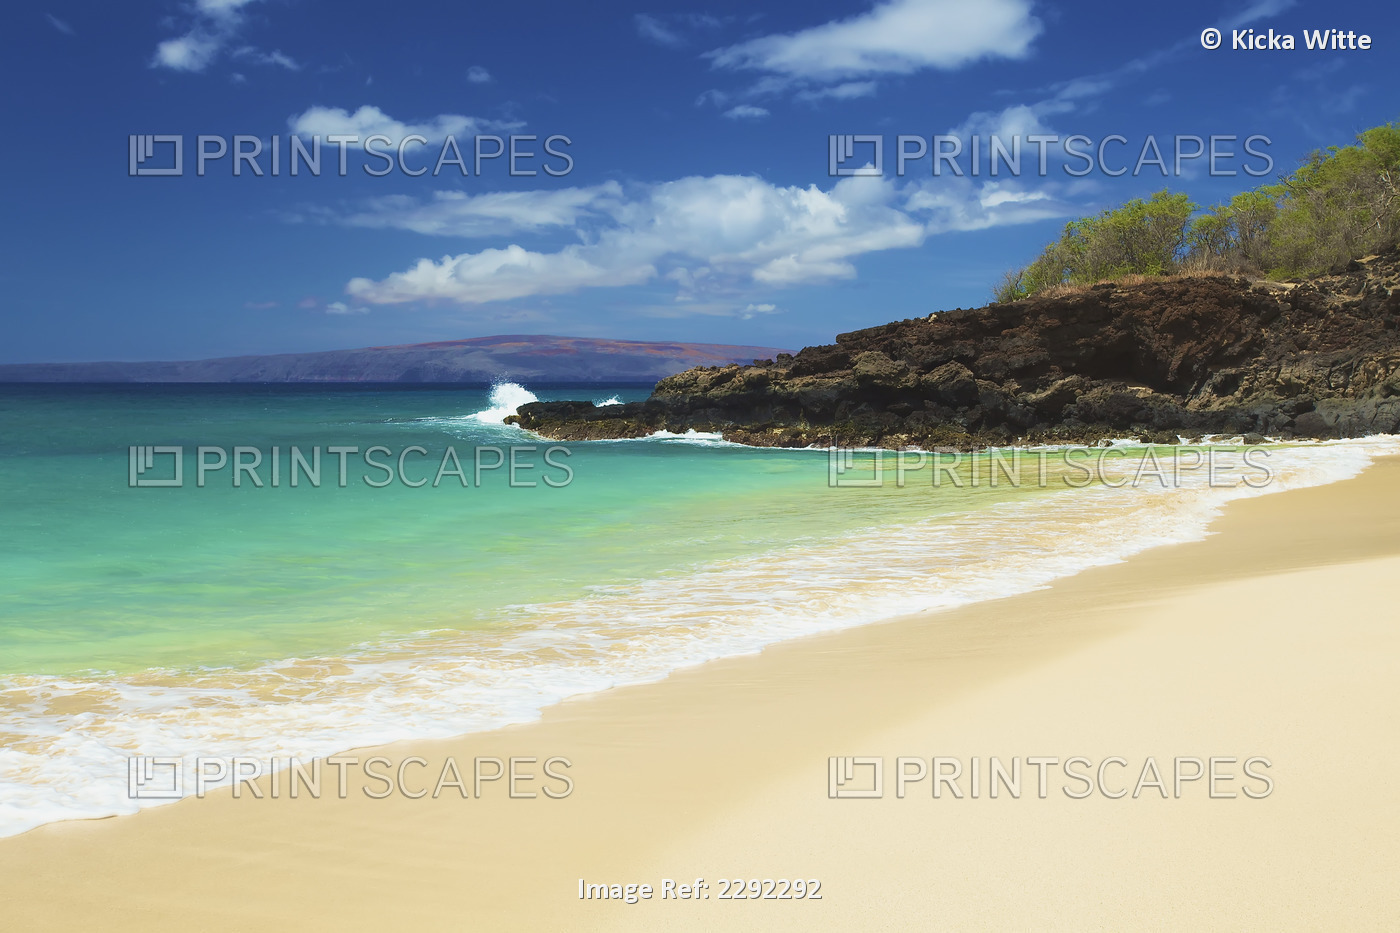 Water washing up on the sandy beach along the coastline of an hawaiian island; ...